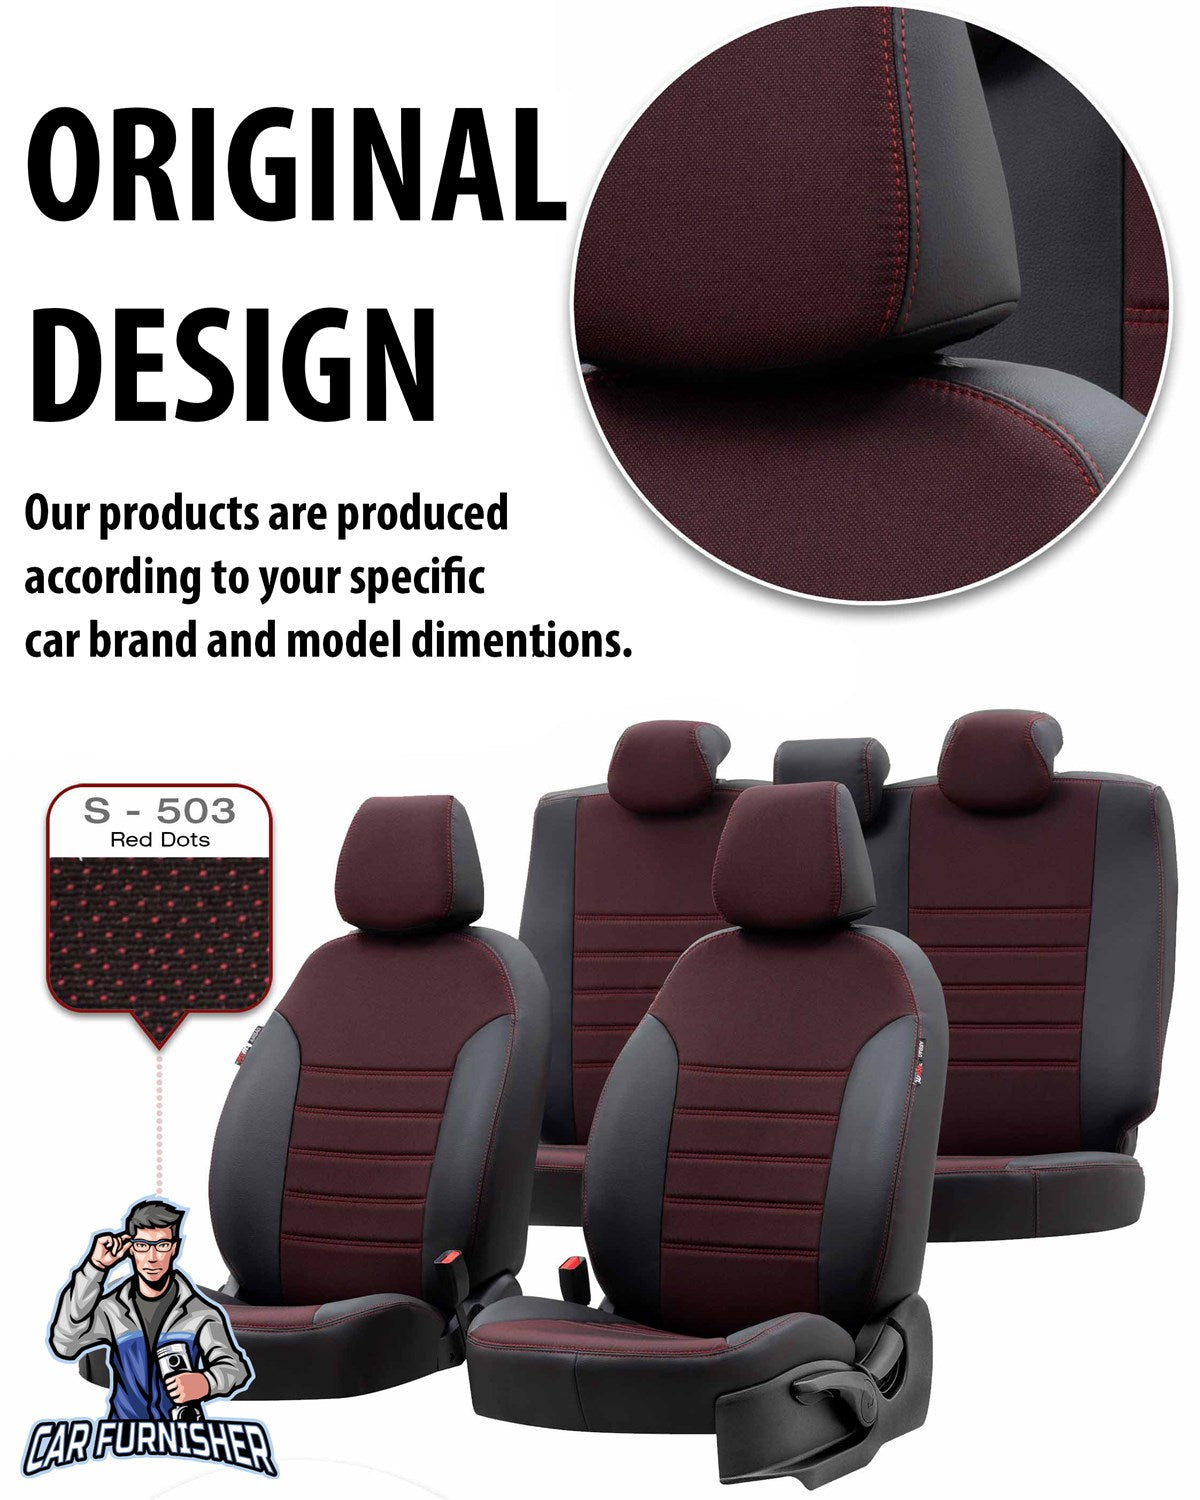 Hyundai H1 Seat Covers Paris Leather & Jacquard Design Red Leather & Jacquard Fabric